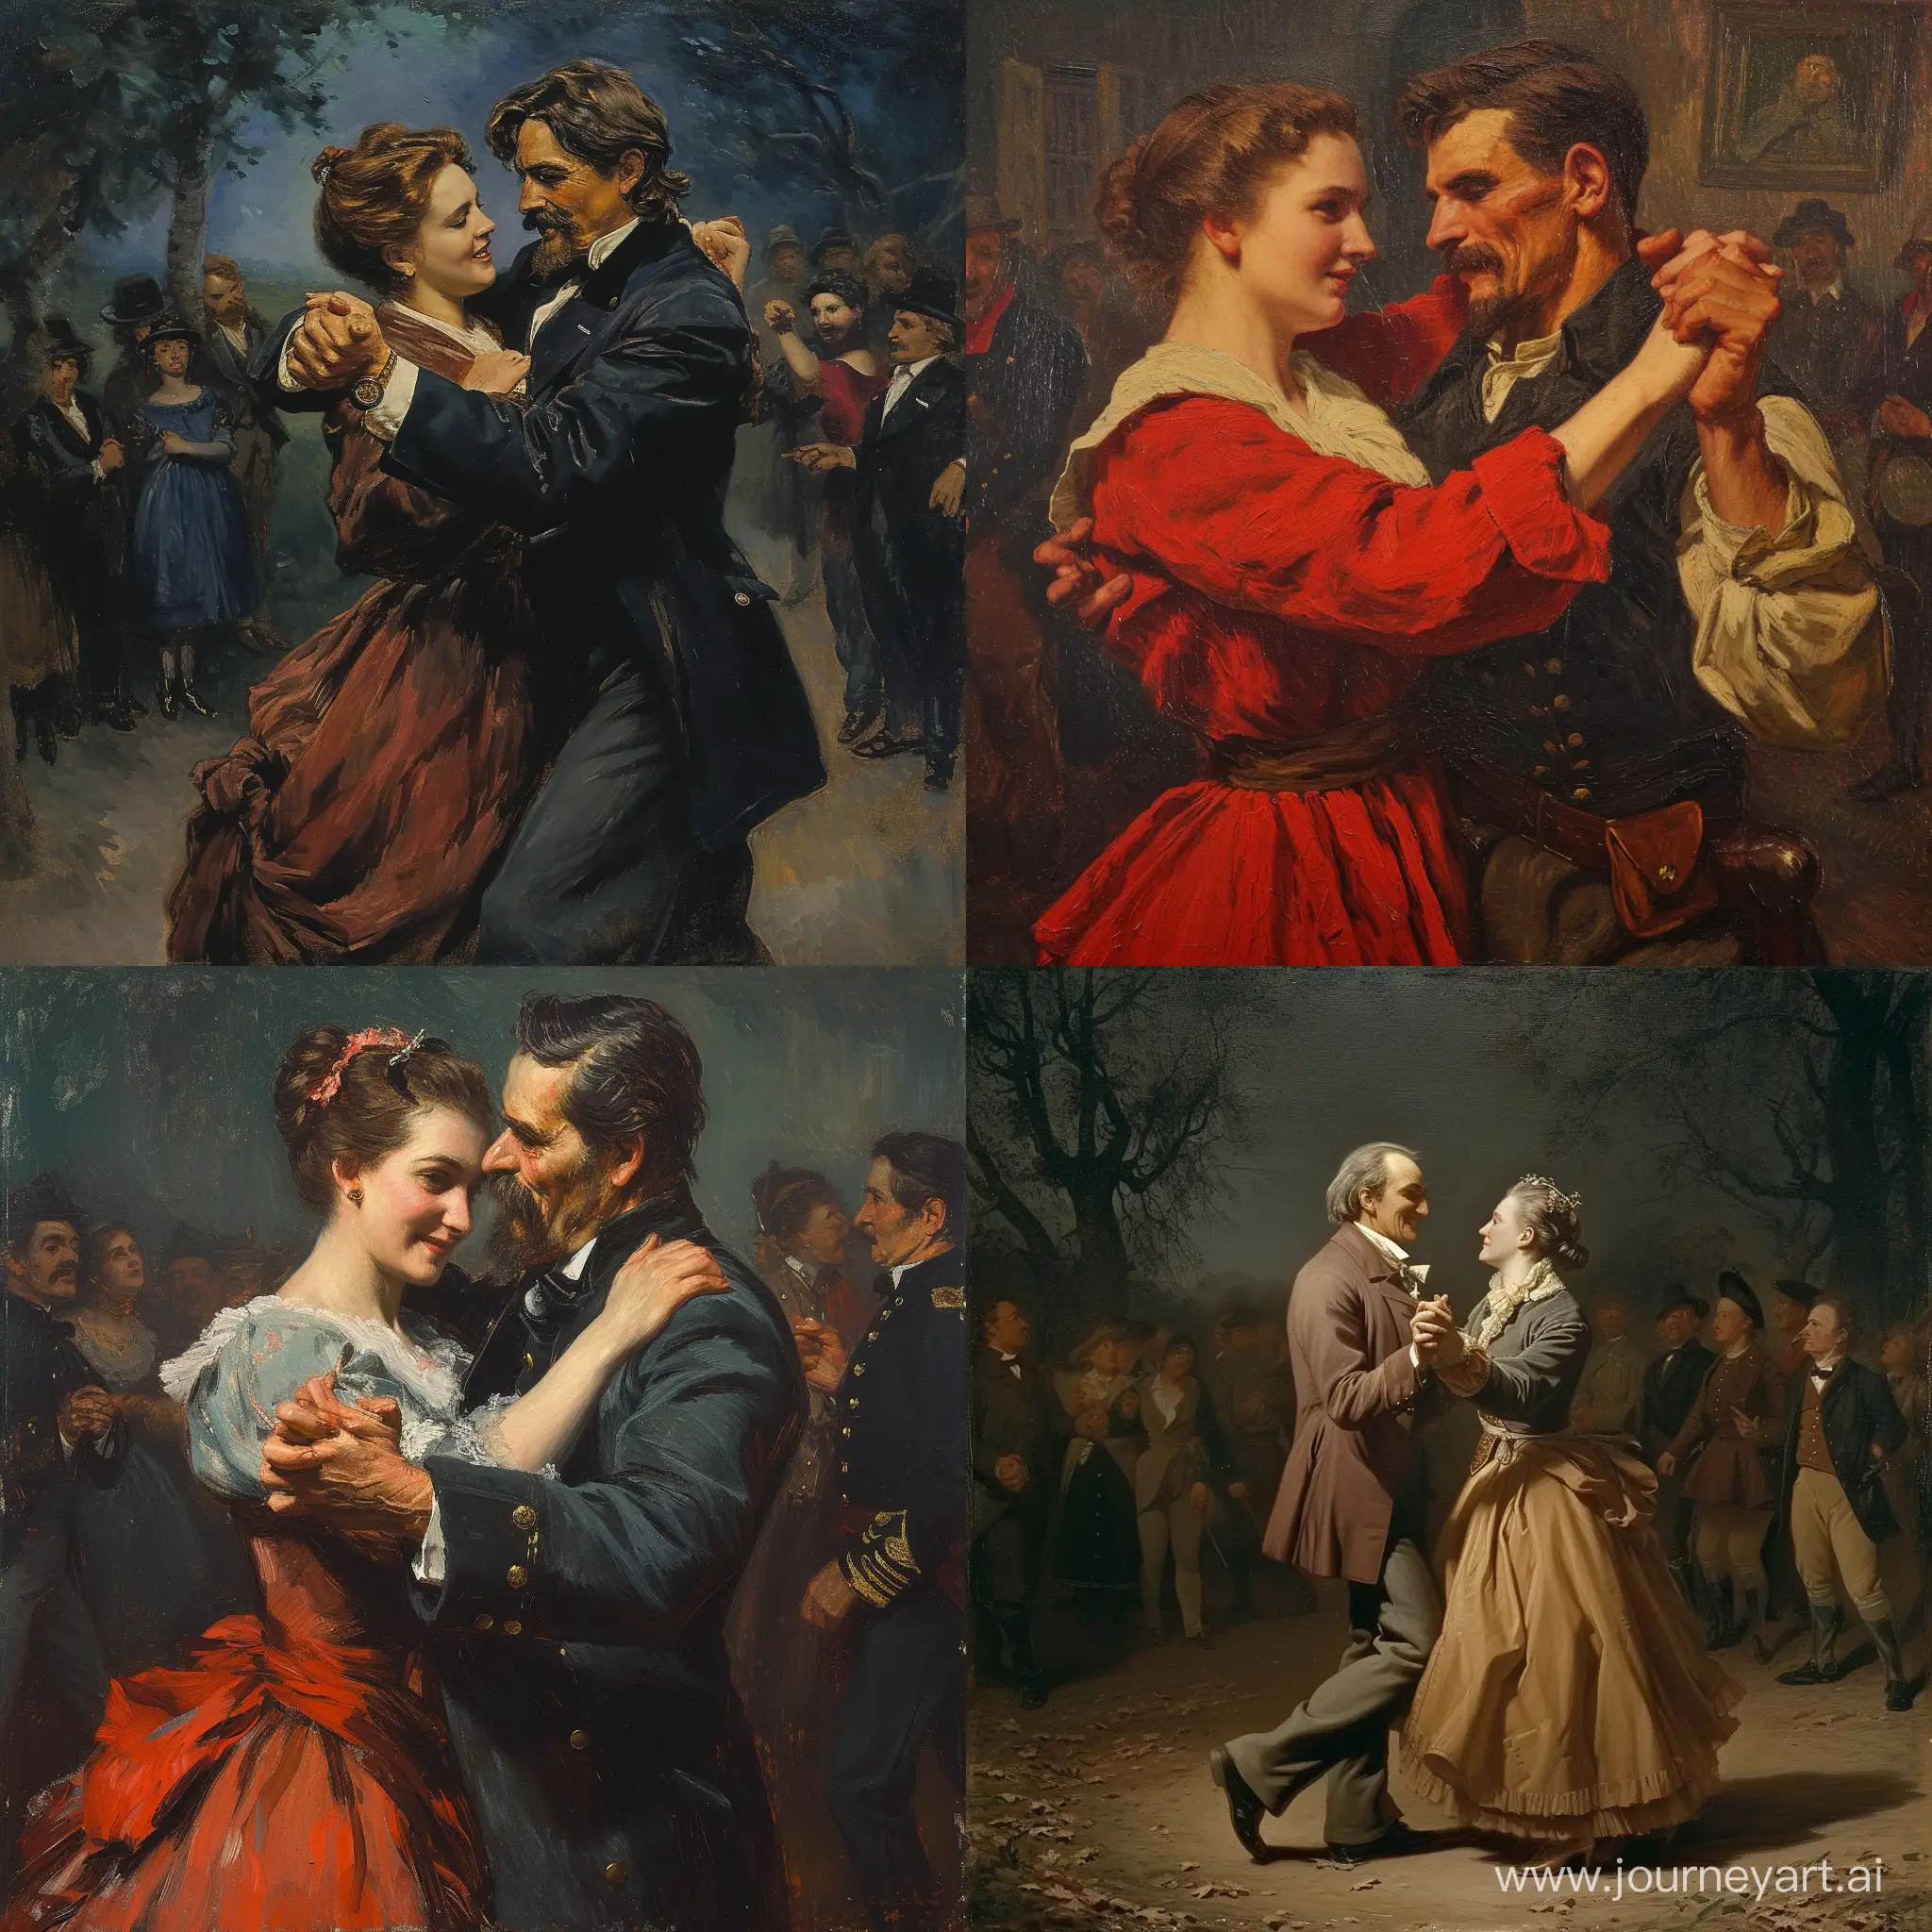 Tadeusz Kościuszko dancing with his beloved woman